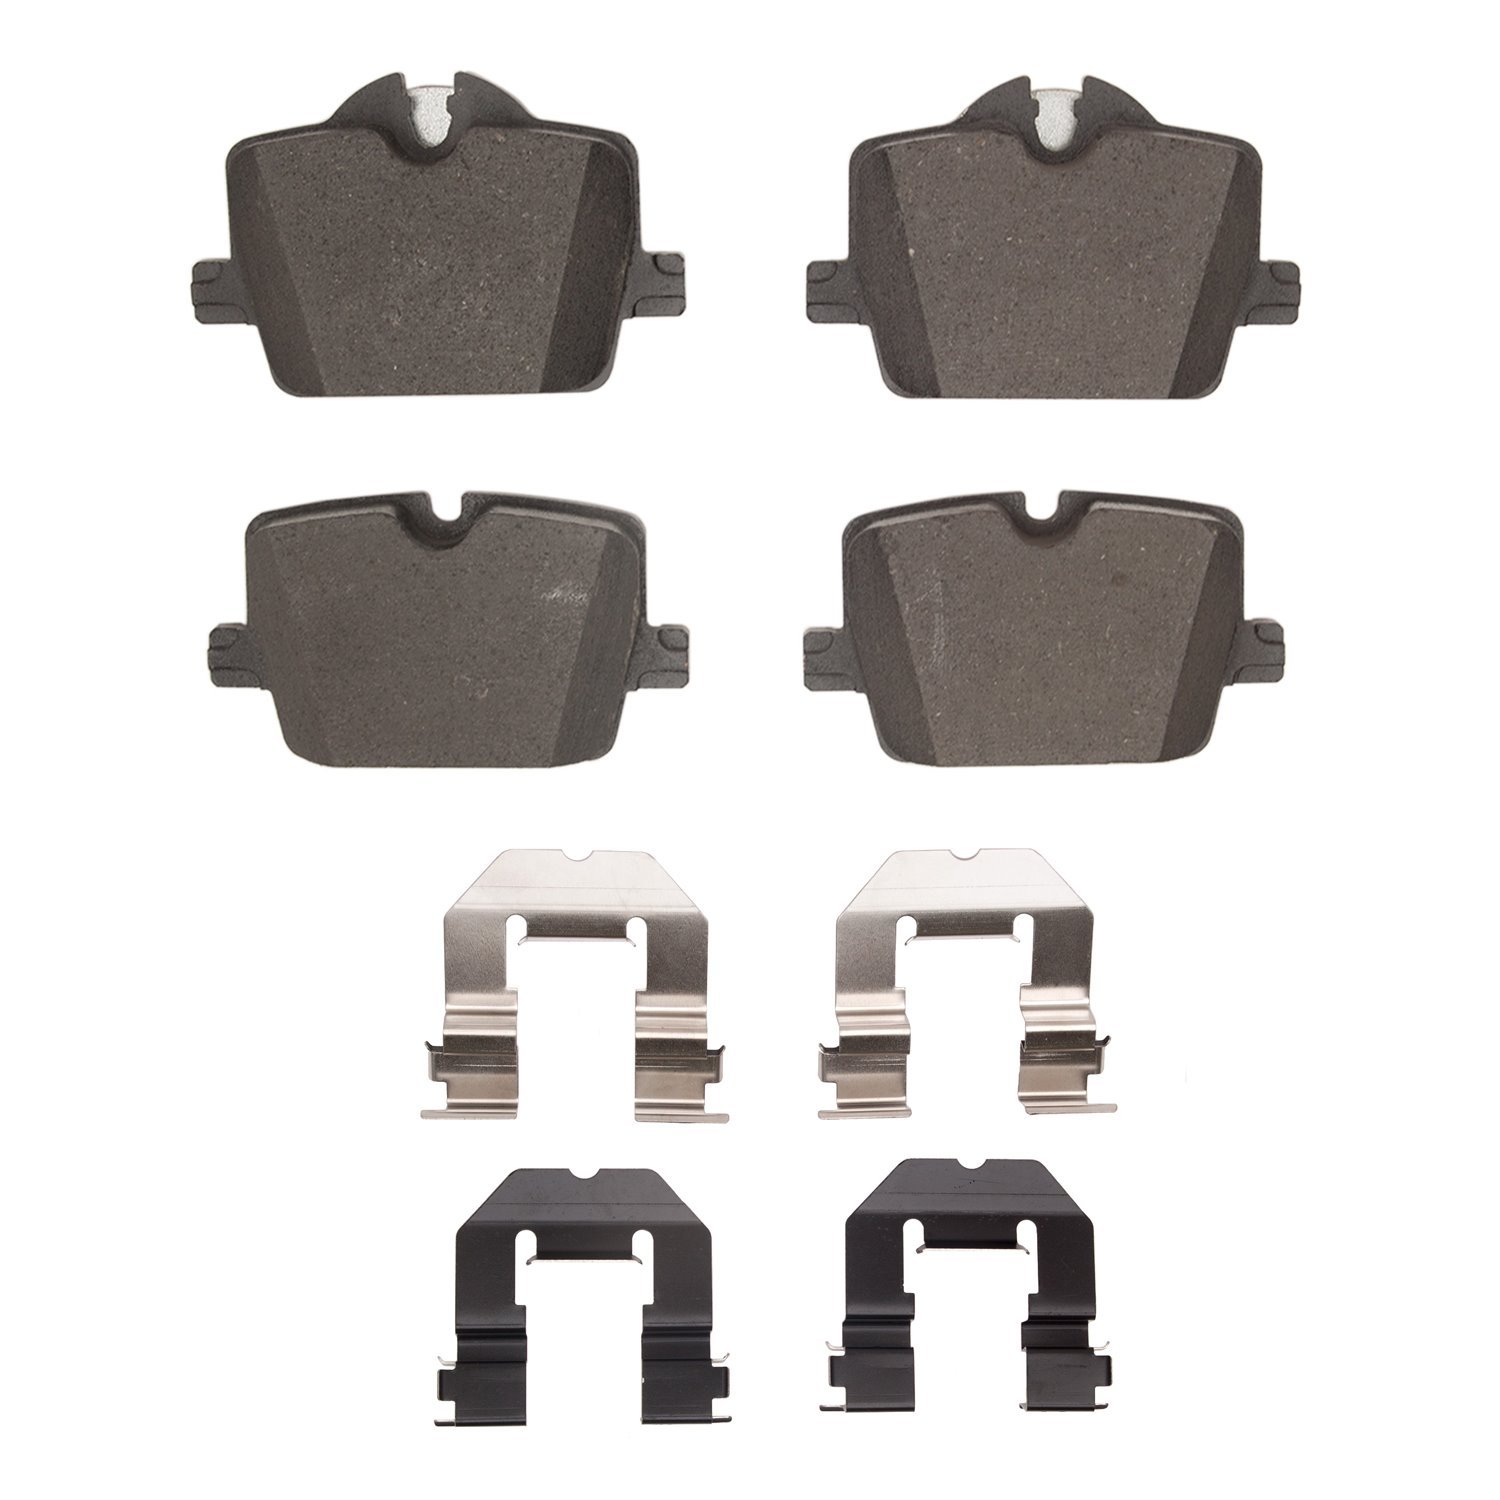 1310-2221-01 3000-Series Ceramic Brake Pads & Hardware Kit, Fits Select Multiple Makes/Models, Position: Rear